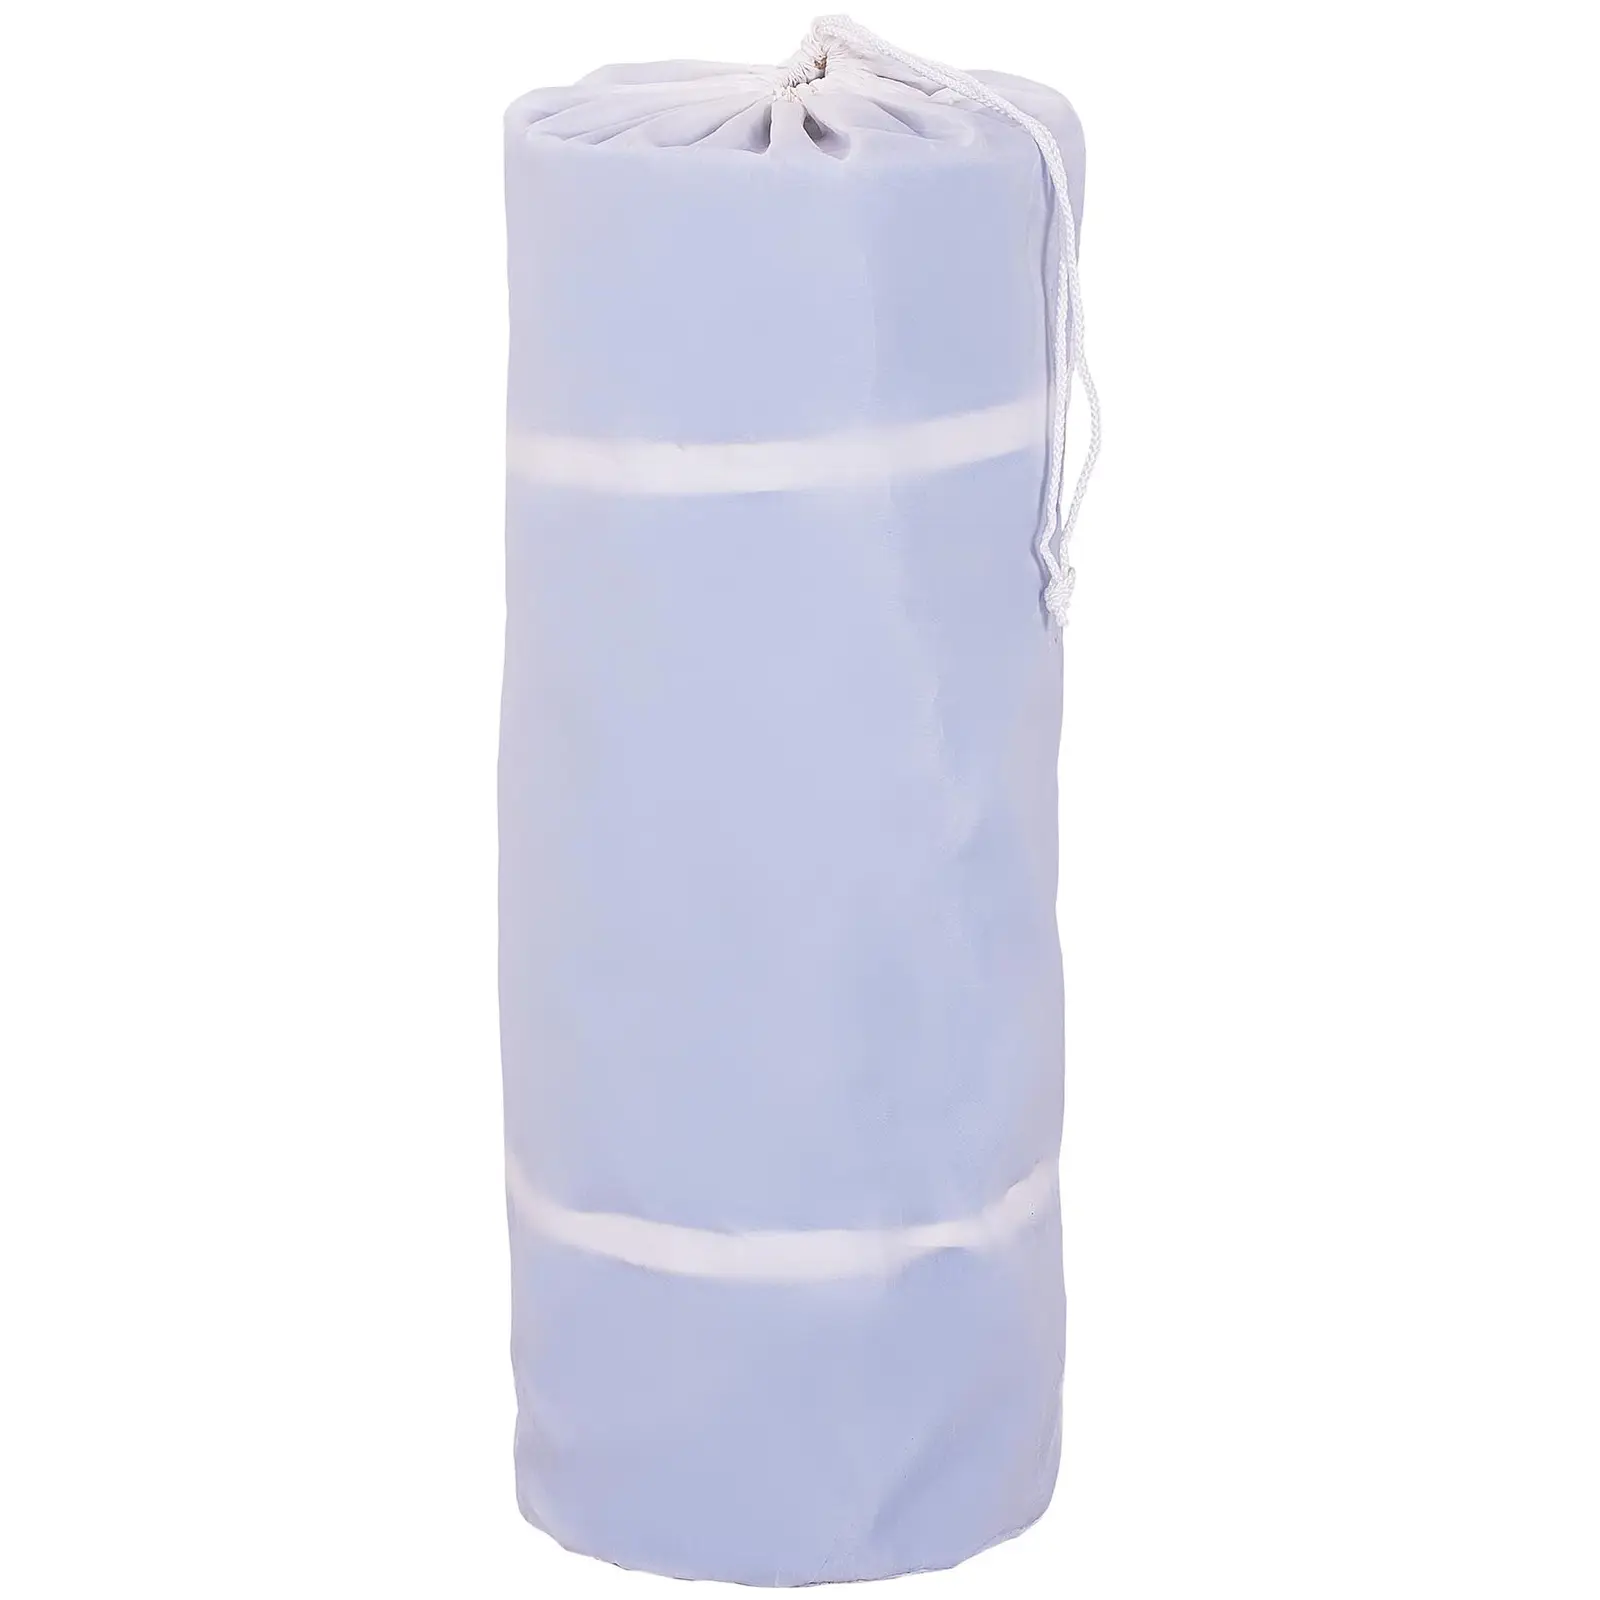 Uppblåsbar gymnastikmatta med pump - 600 x 100 x 20 cm - 300 kg - blå/vit